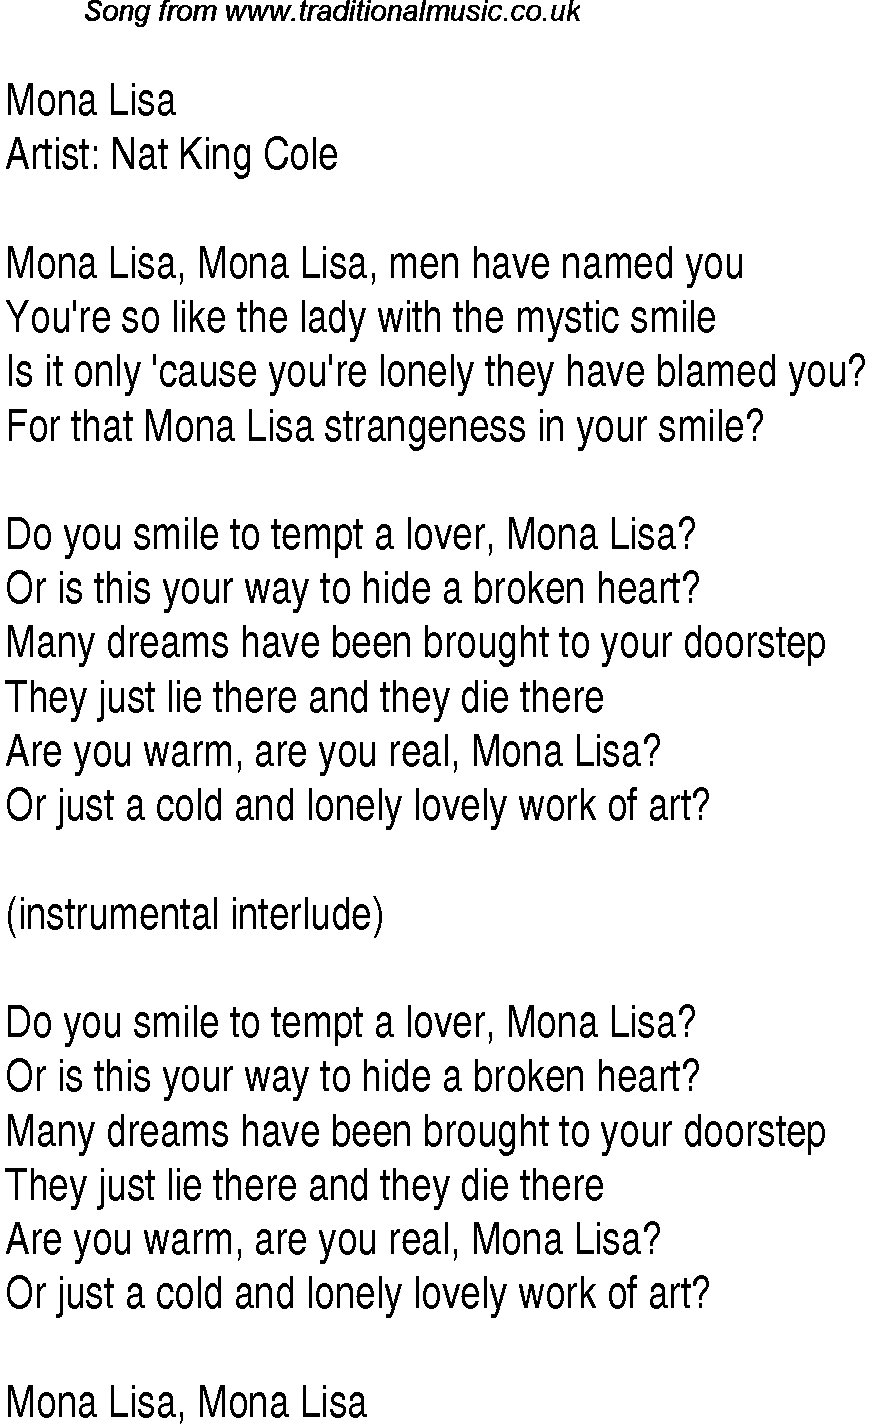 Music charts top songs 1948 - lyrics for Mona Lisa